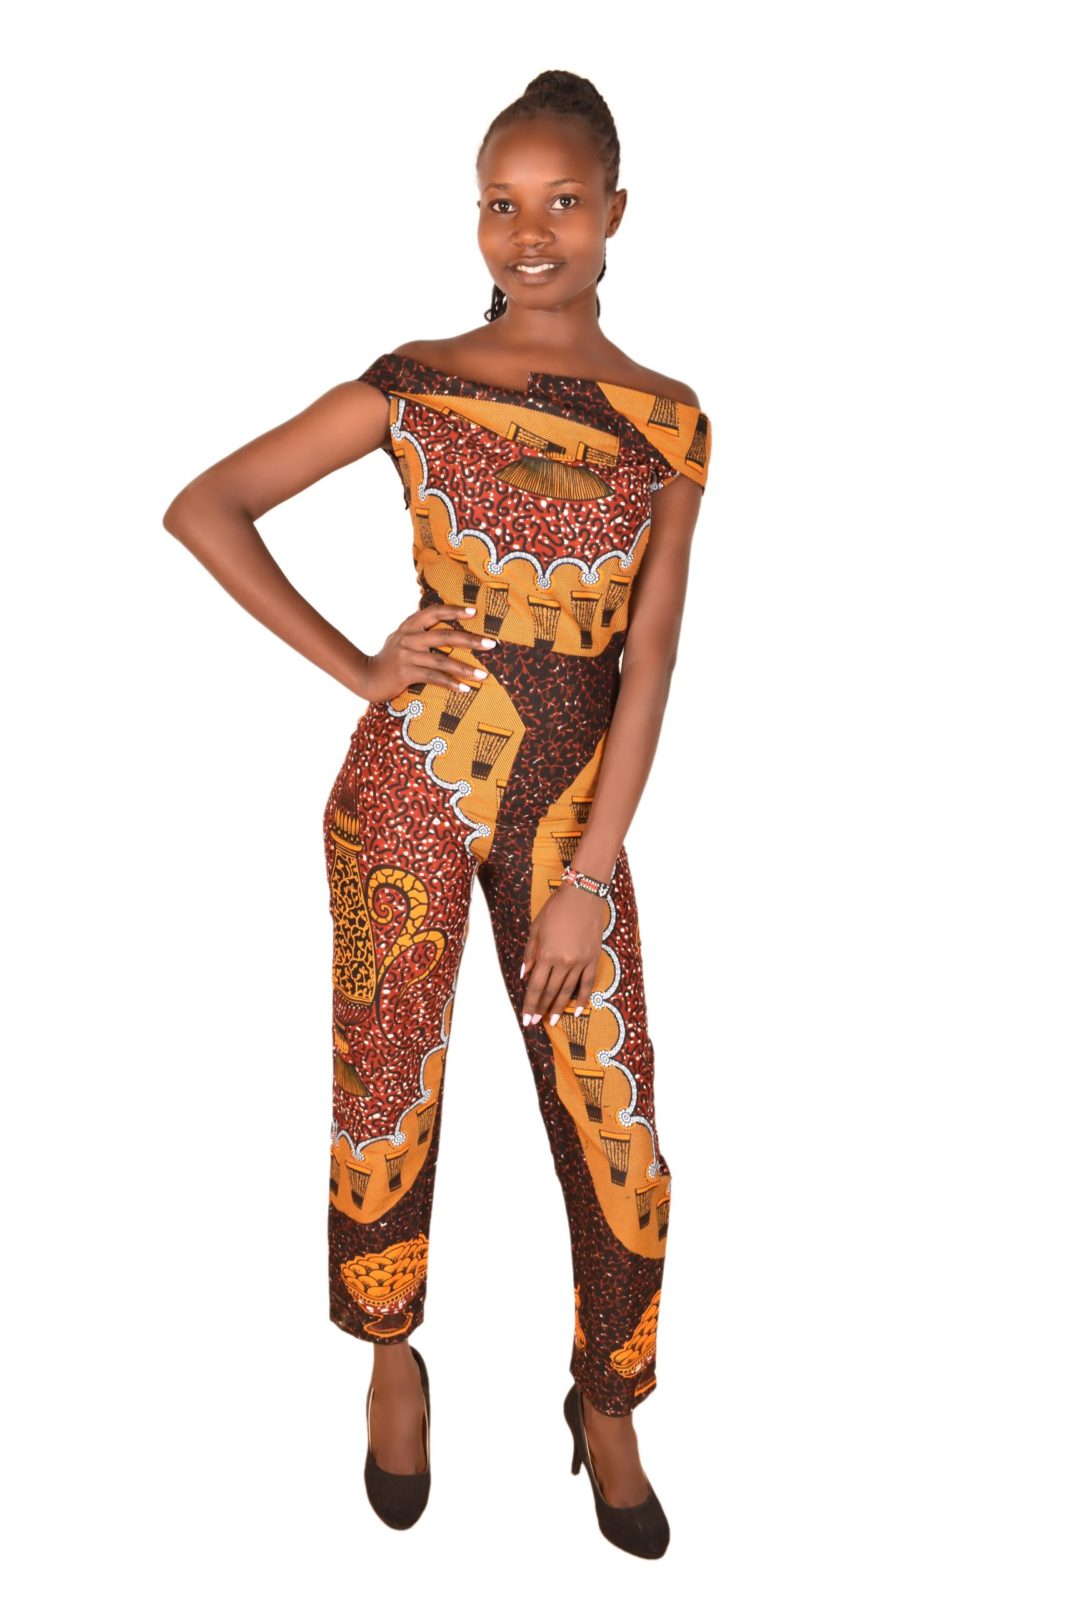 The girls in African print jumpsuit - Kipfashion